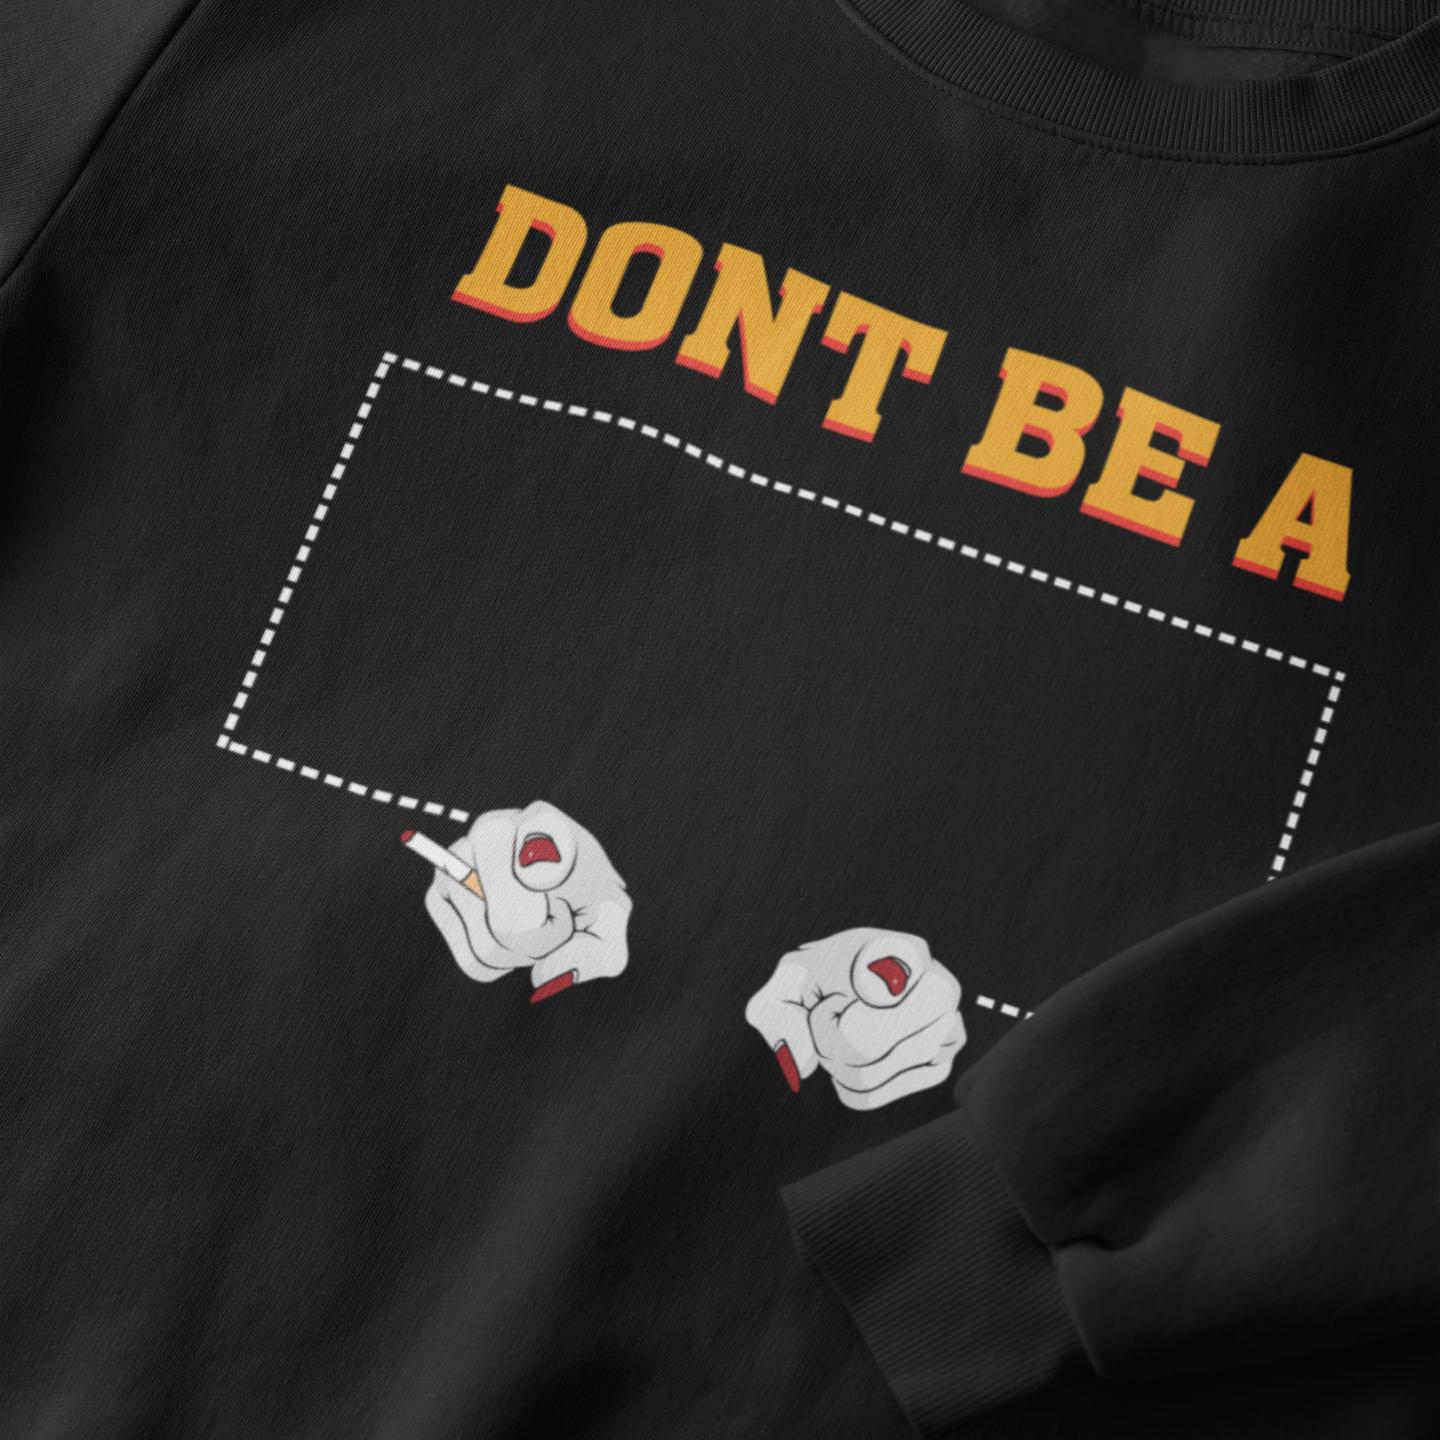 Dont Be A Square Pulp Fiction - Sweatshirt